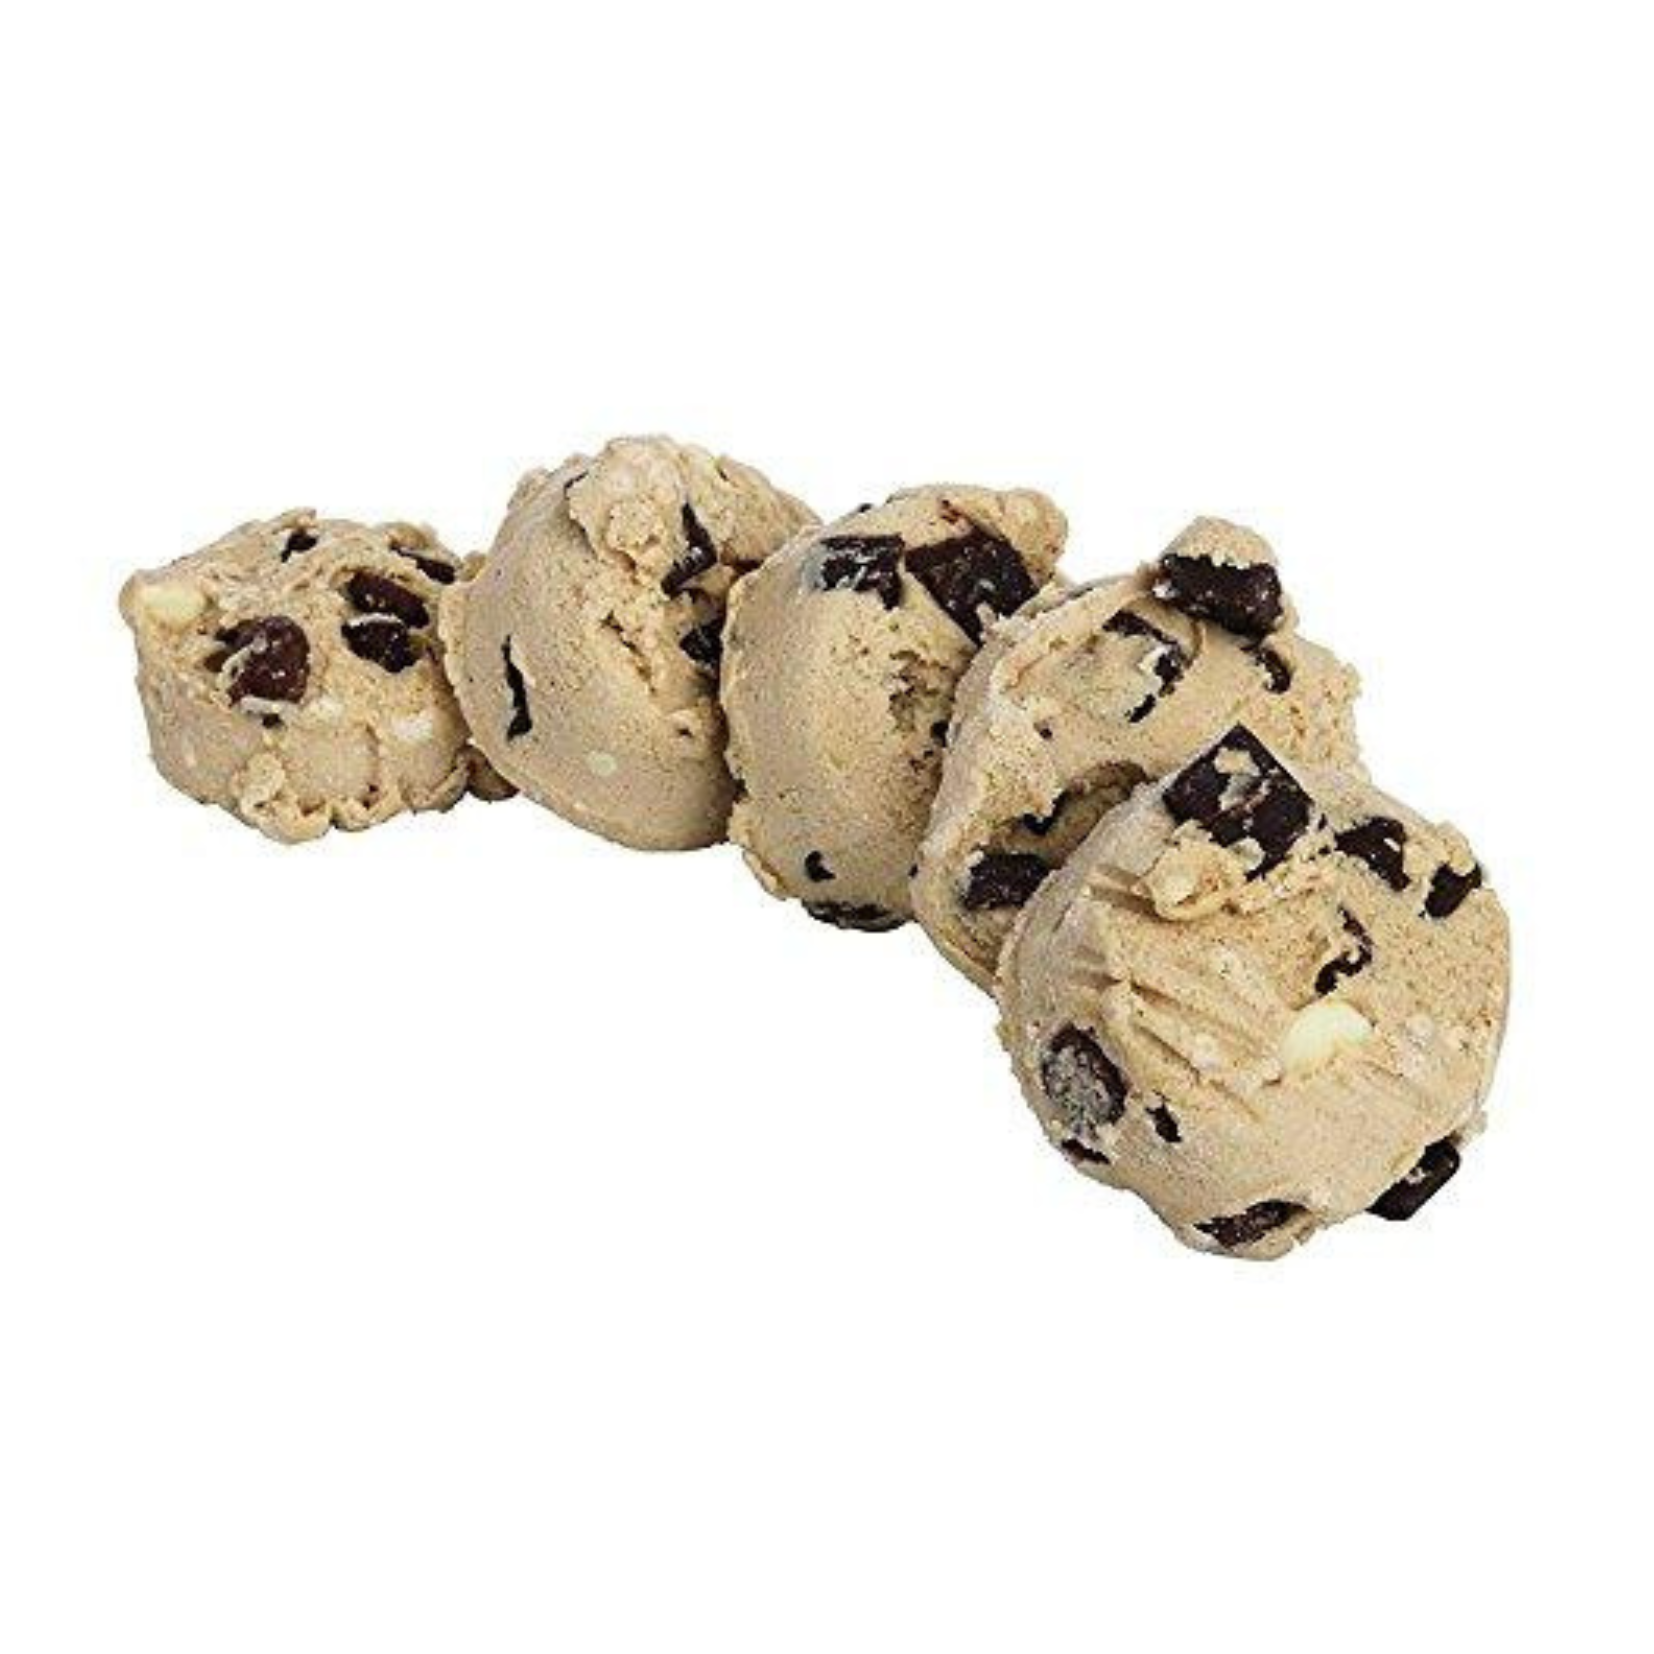 Chocolate Chunk Cookie Dough Balls 12ct